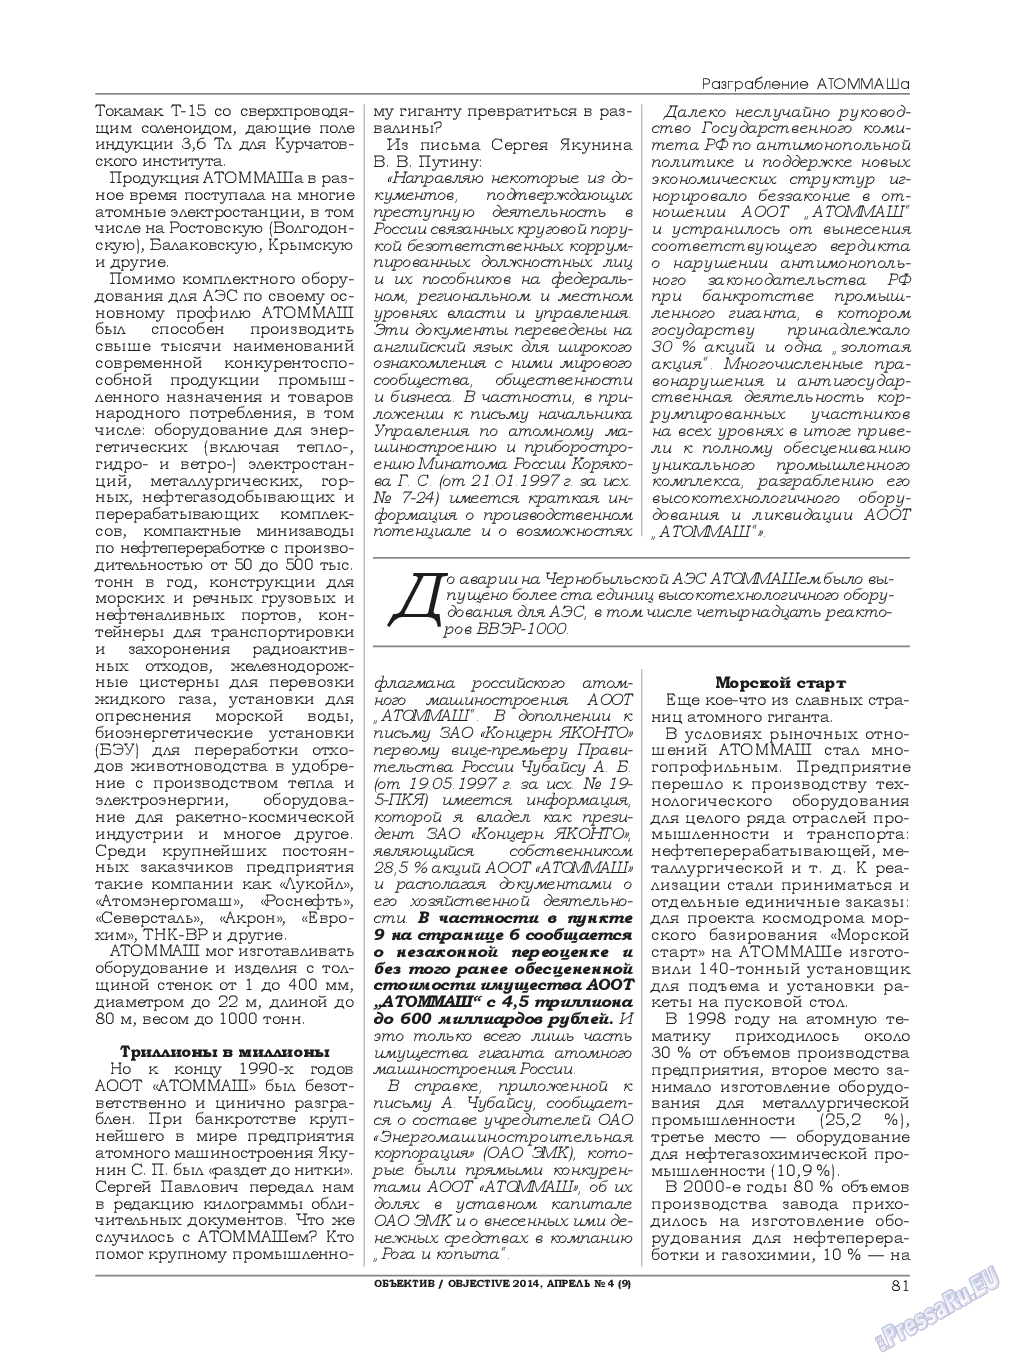 Объектив EU, журнал. 2014 №4 стр.81